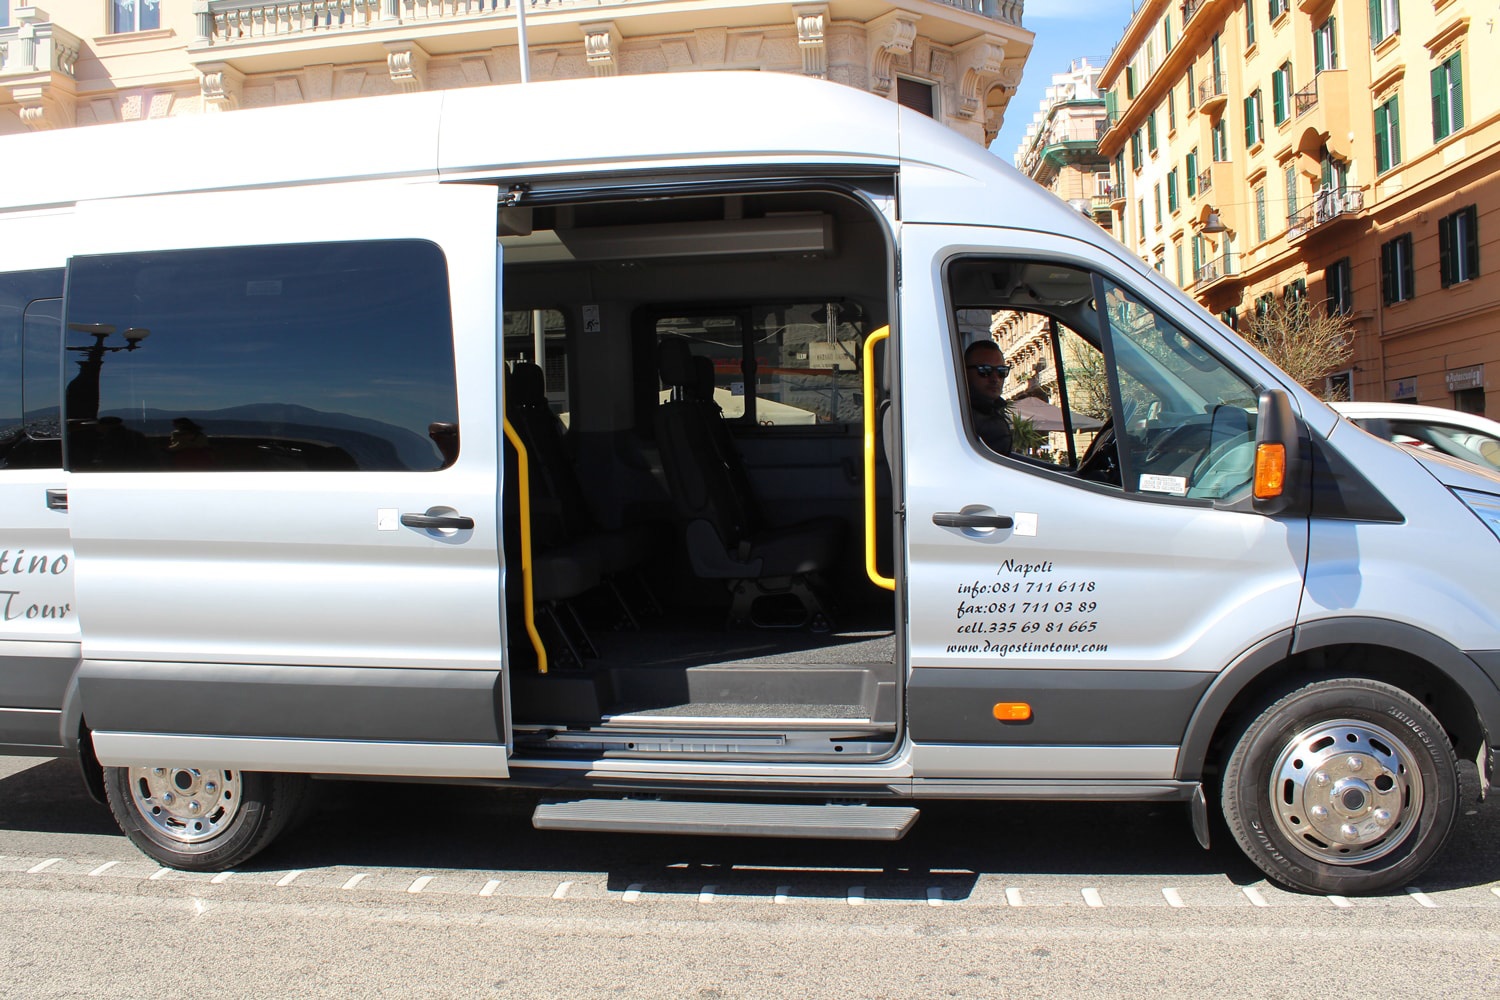 D'Agostino Tour - Noleggio Autobus per Disabili a Napoli